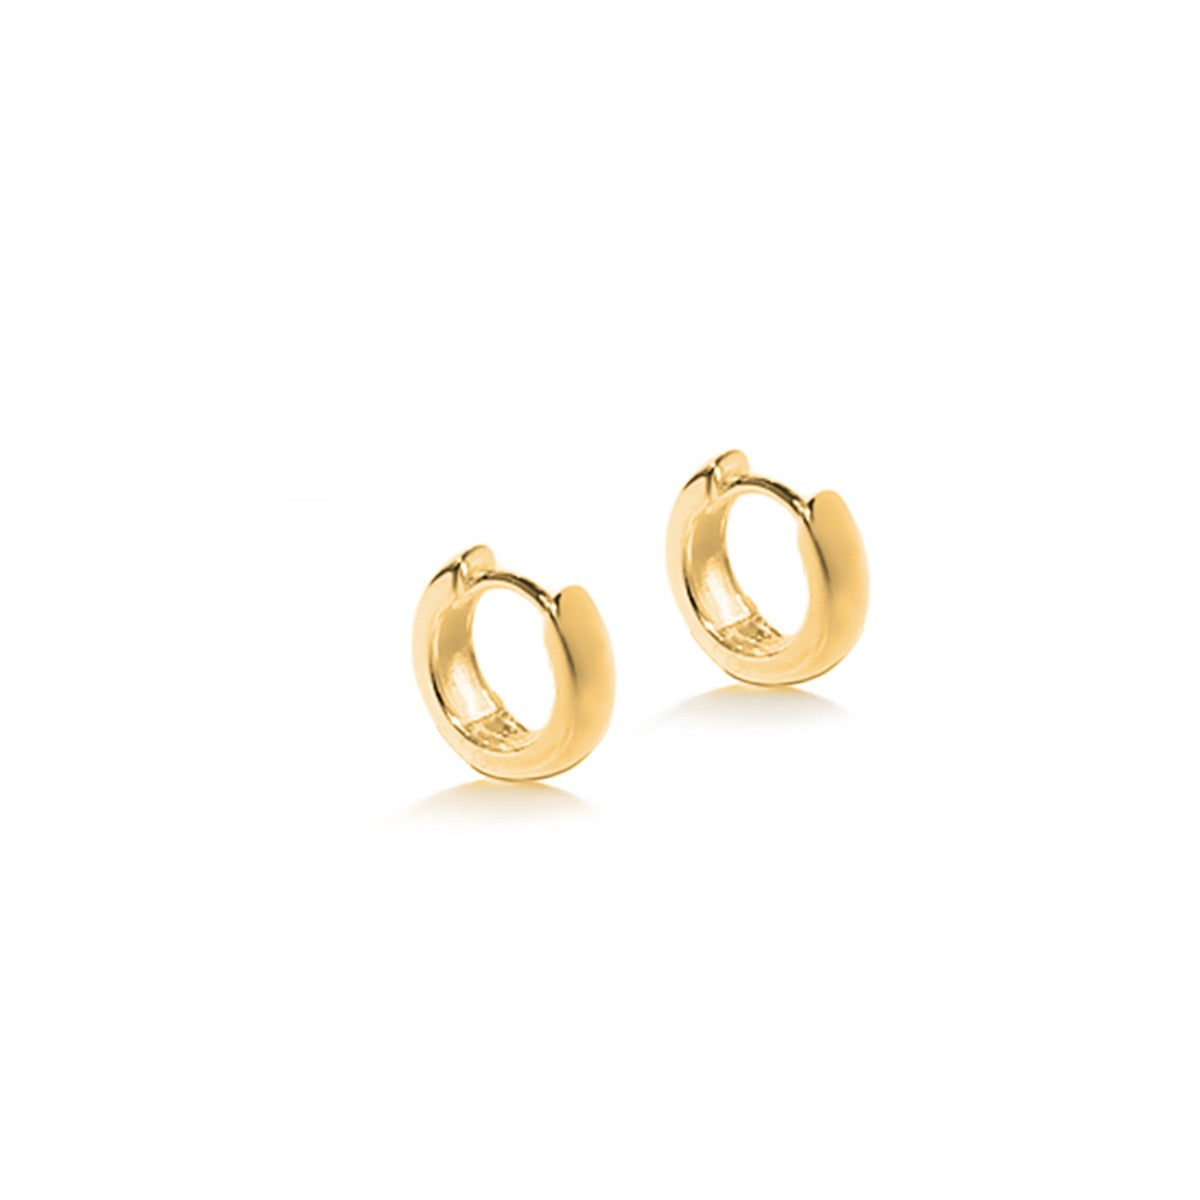 3.5mm Gold plated huggie earrings